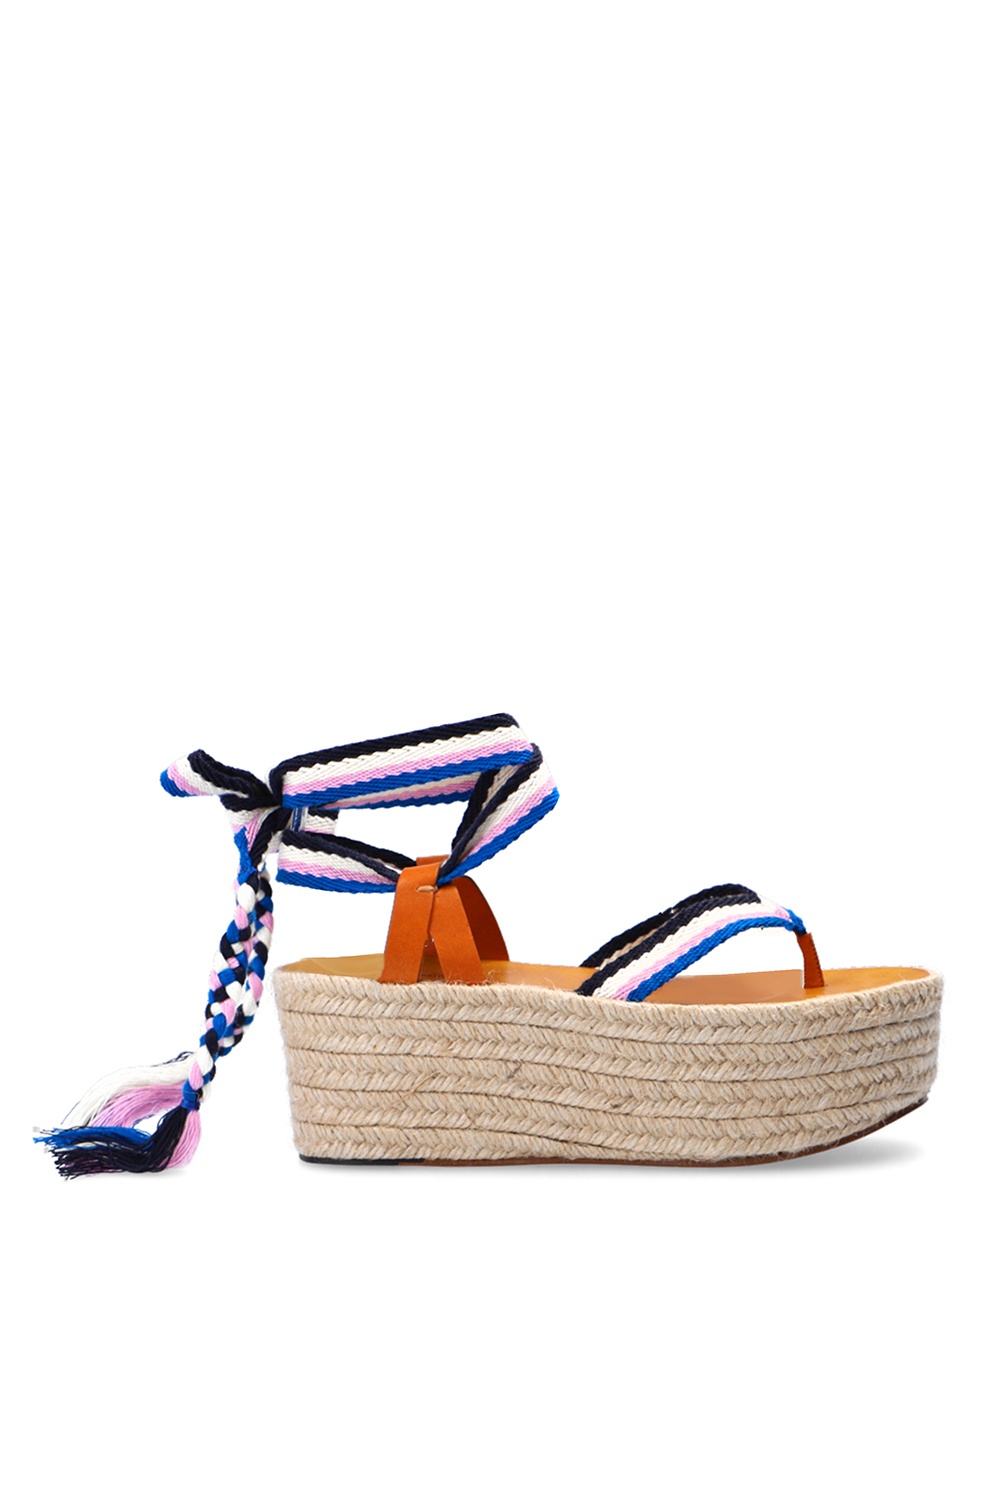 Isabel Marant ‘Mezzee’ platform sandals